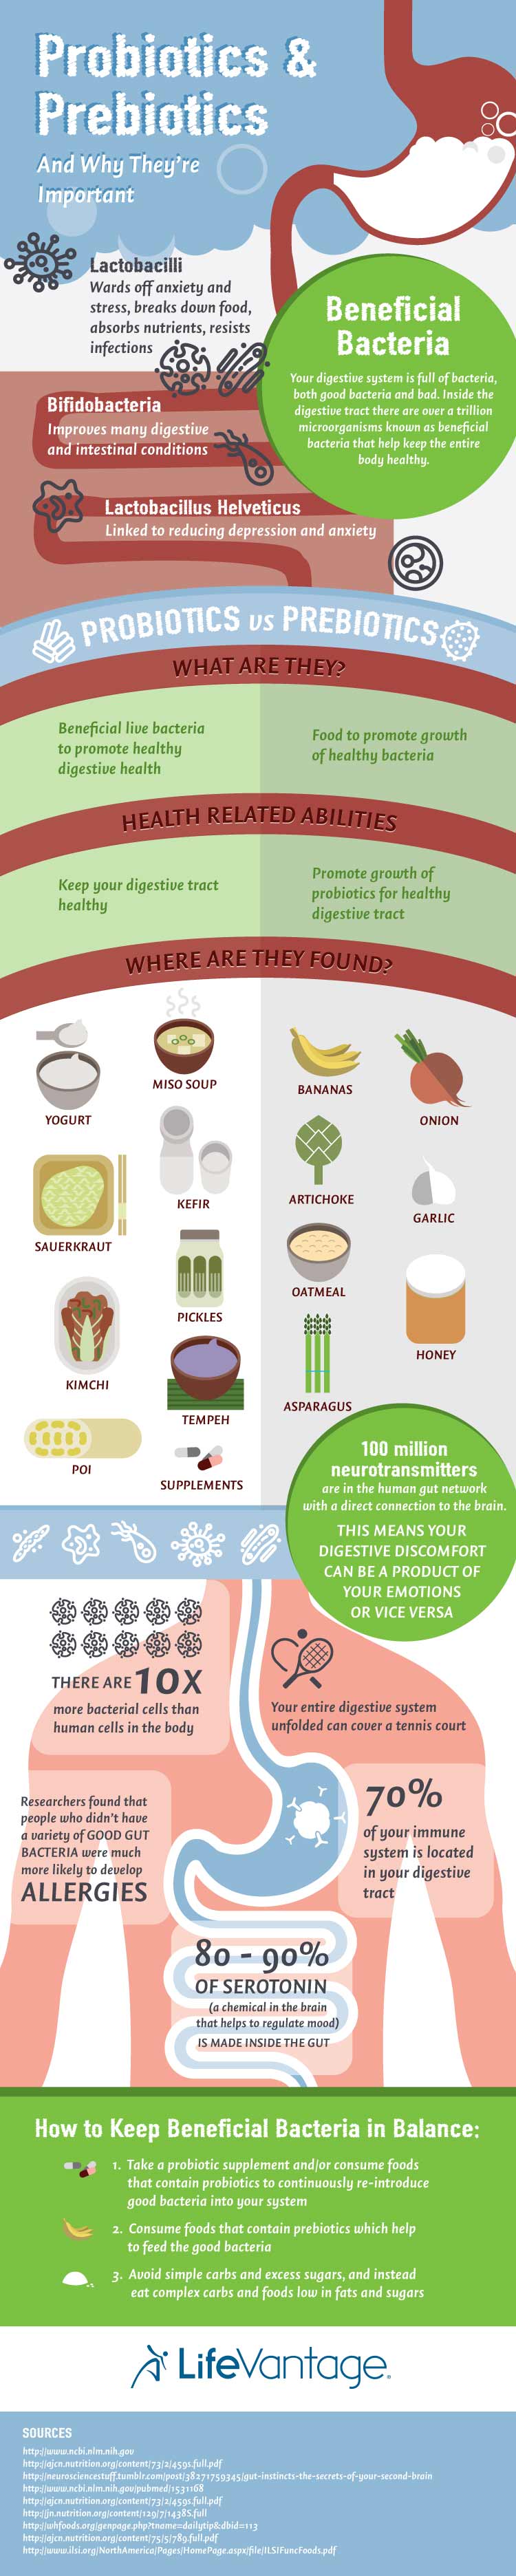 Benefits of Probiotics & Foods that Contain Probiotics & Prebiotics